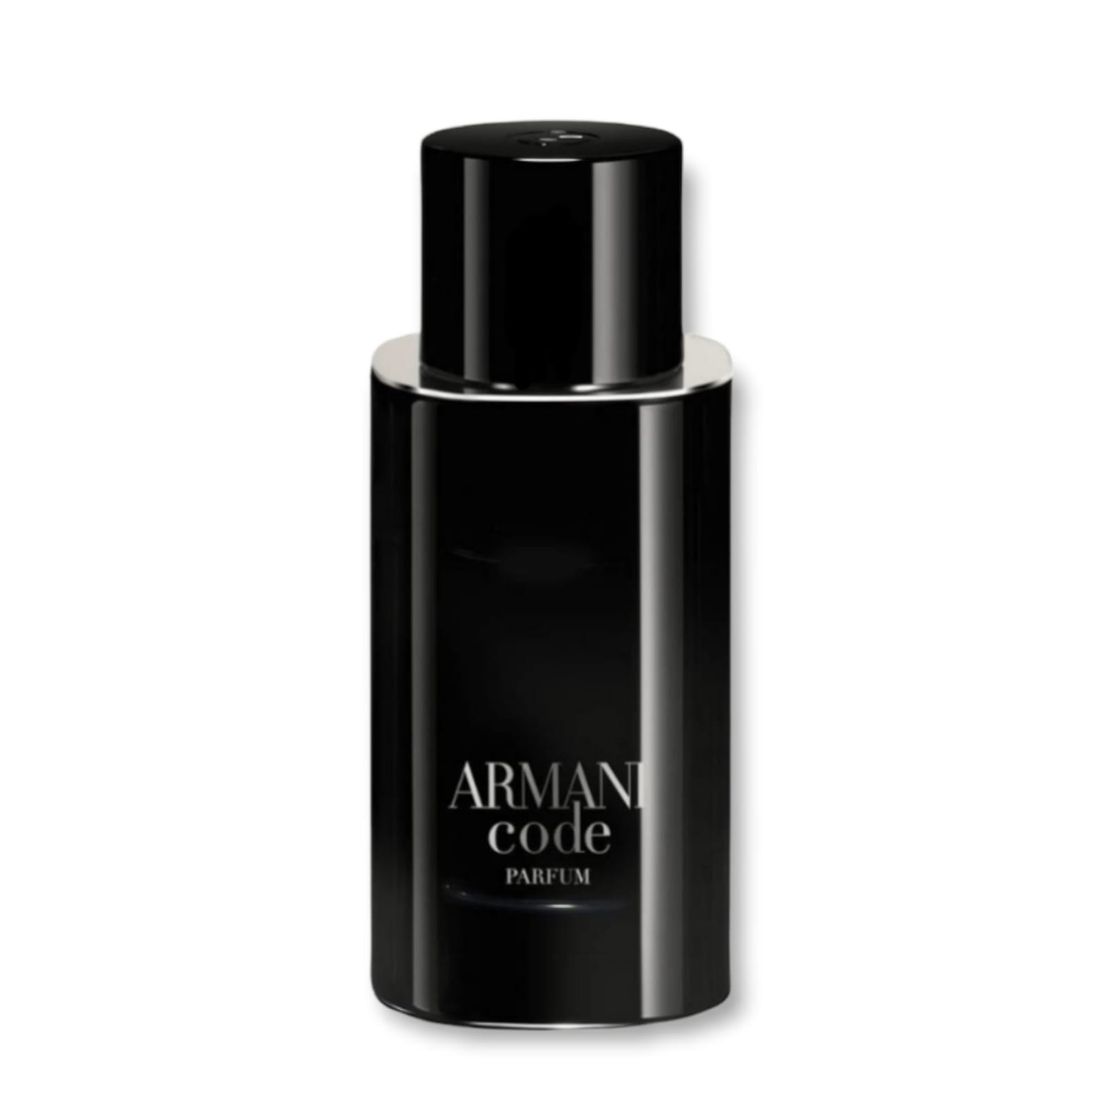 giorgio armani armani code parfum ekstrakt perfum 75 ml  tester 